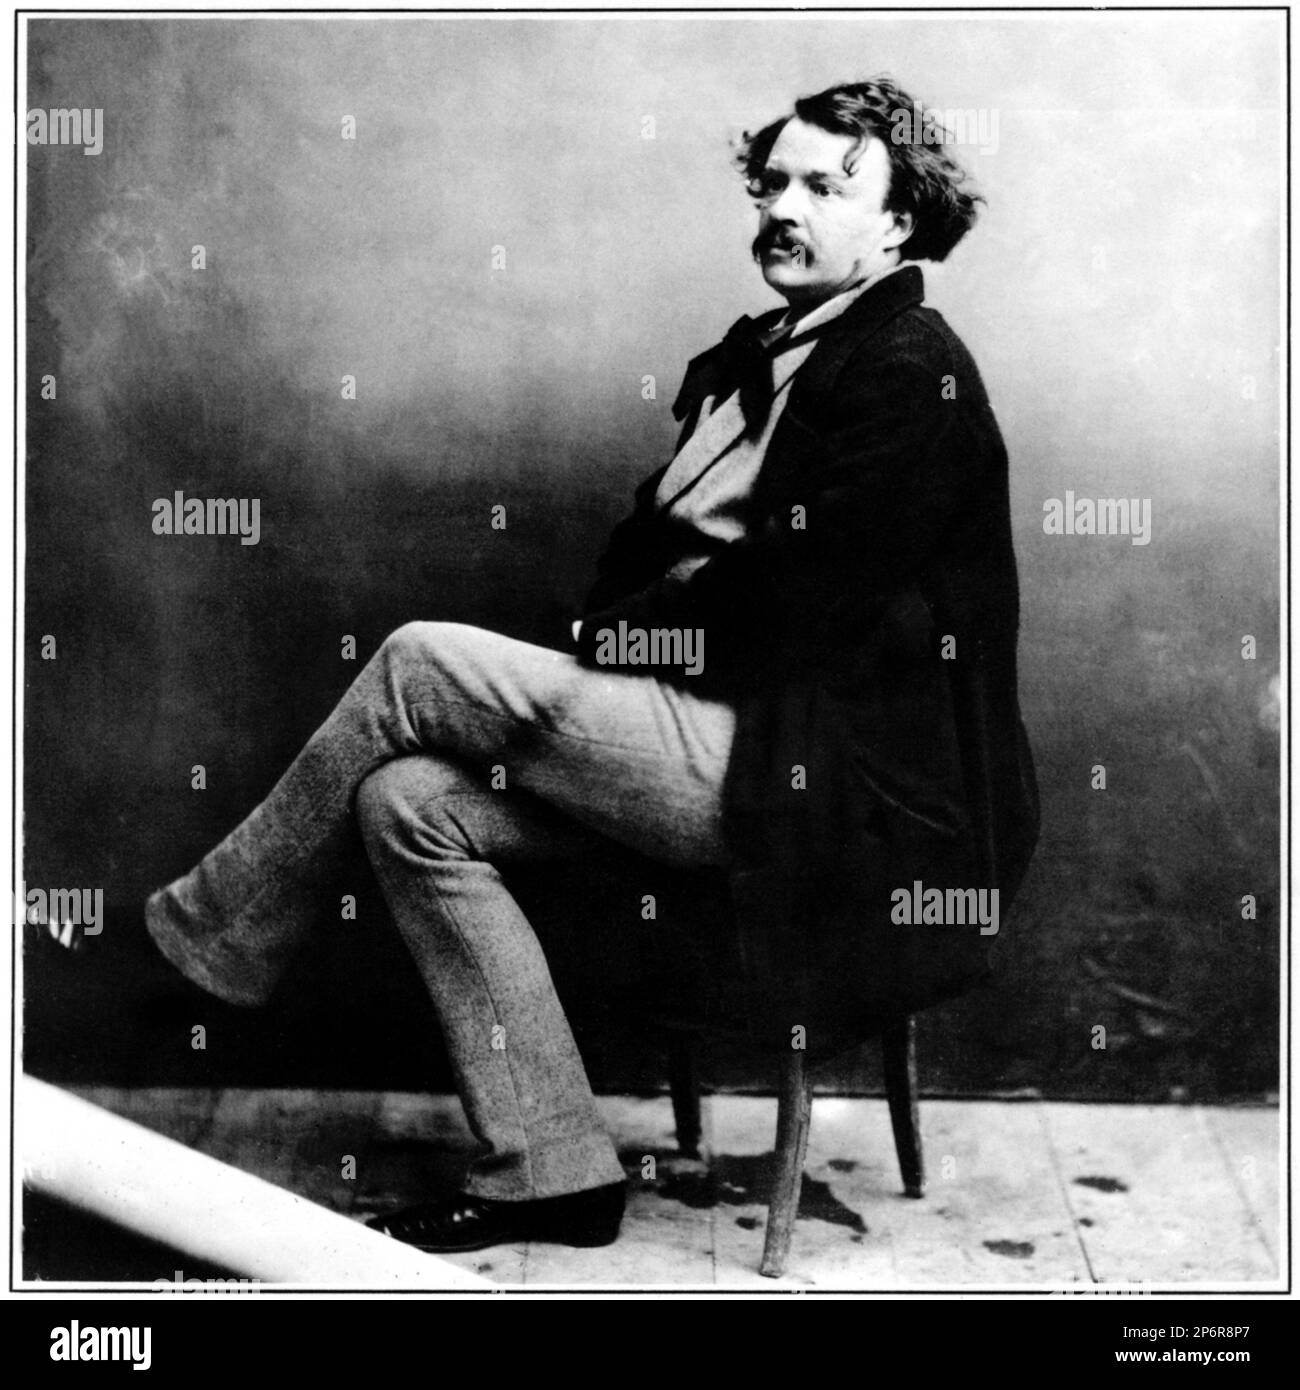 1854 , FRANCE :  The french photographer NADAR ( pseudonym of Gaspard-Felix Tournachon , 1820 – 1910 ), caricaturist, journalist, novelist and balloonist . Photo by  Nadar . - foto storiche - foto storica  - scienziato - scientist  - portrait - ritratto  - FRANCIA - GIORNALISTA - CARICATURISTA - FOTOGRAFO - FOTOGRAFIA - PHOTOGRAPHER - PHOTOGRAPHY - tie - cravatta  - baffi - moustache ---- Archivio GBB Stock Photo